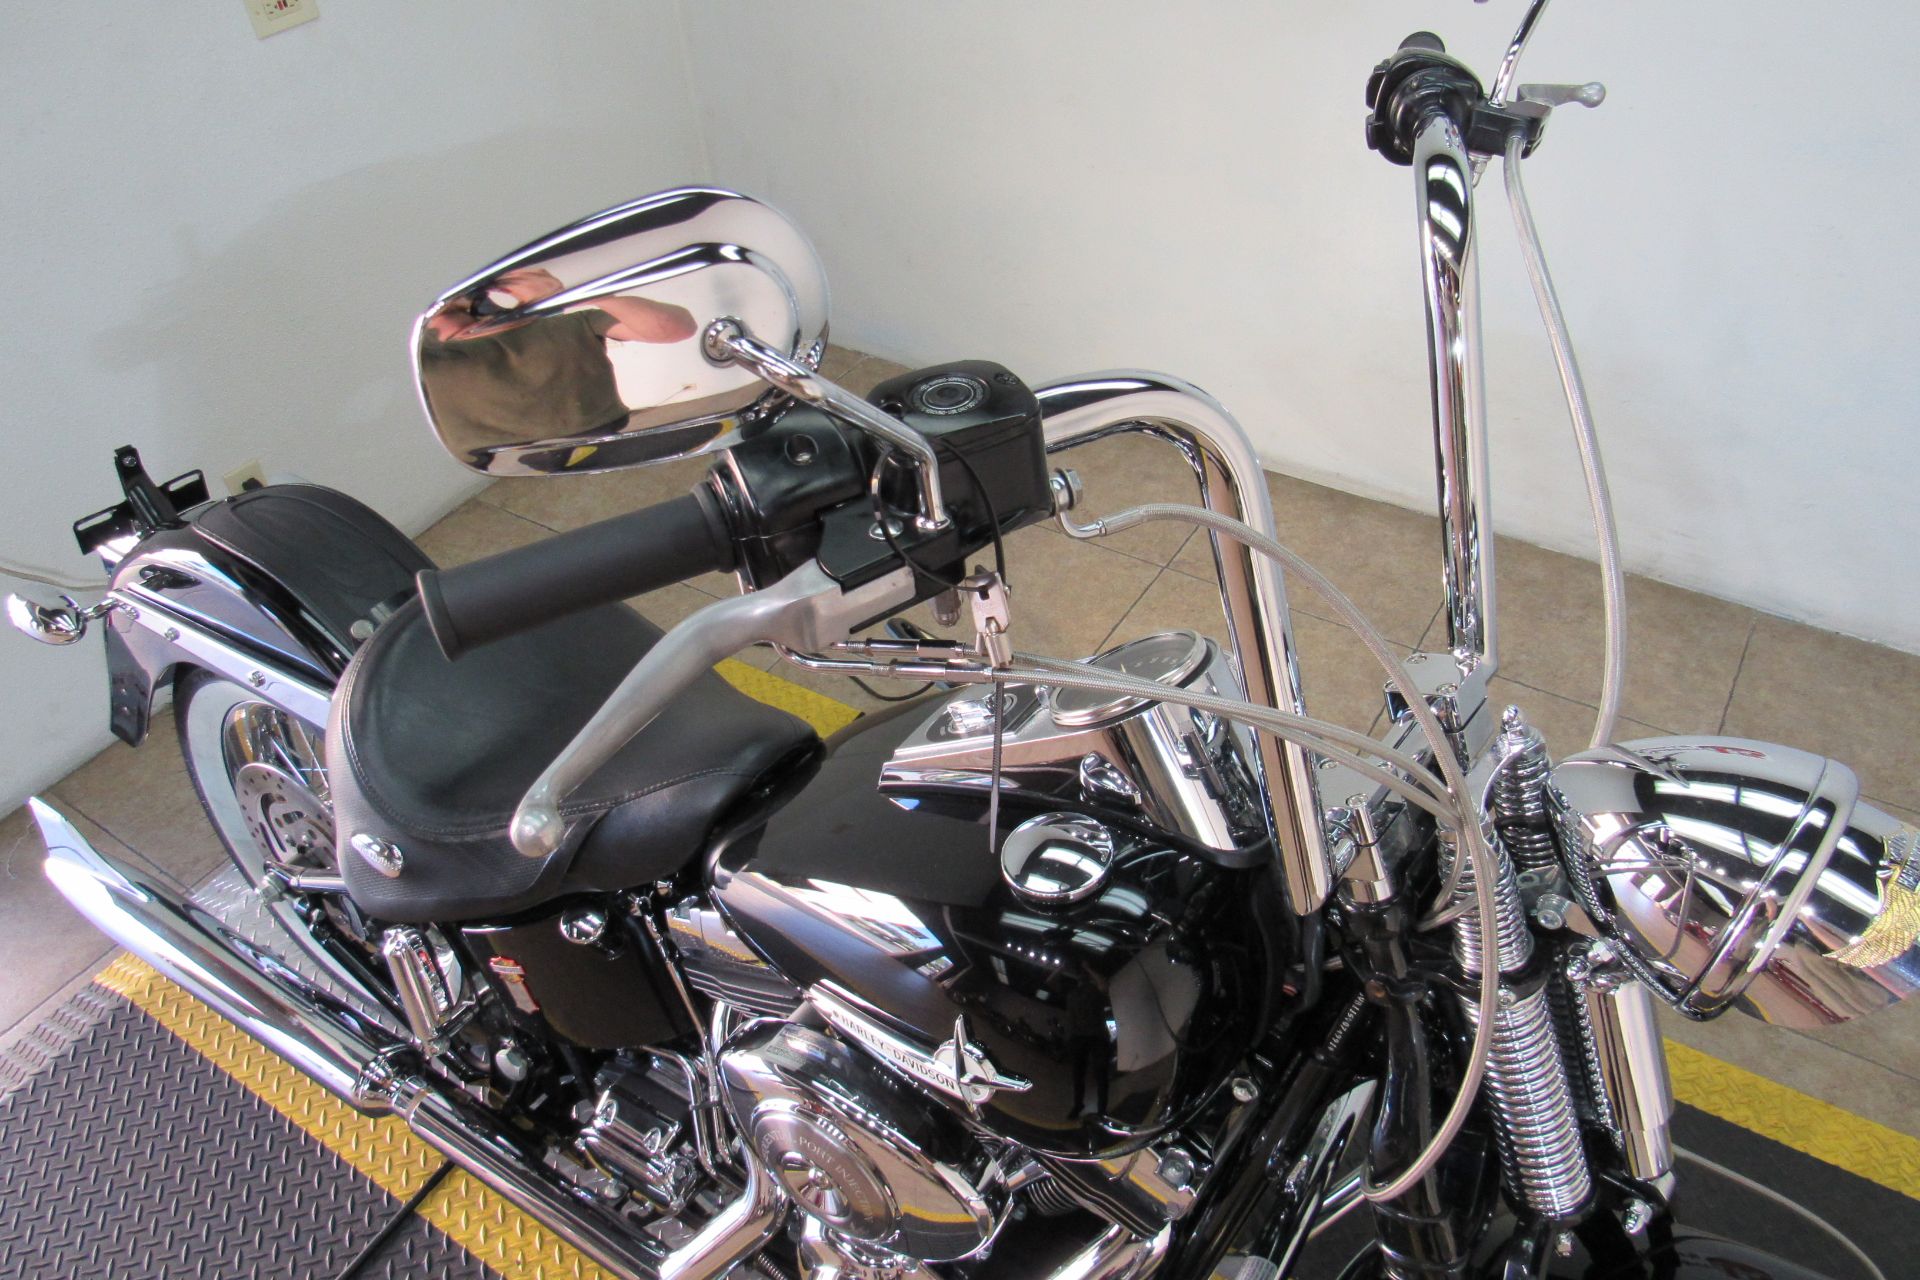 2005 Harley-Davidson FLSTSC/FLSTSCI Softail® Springer® Classic in Temecula, California - Photo 25